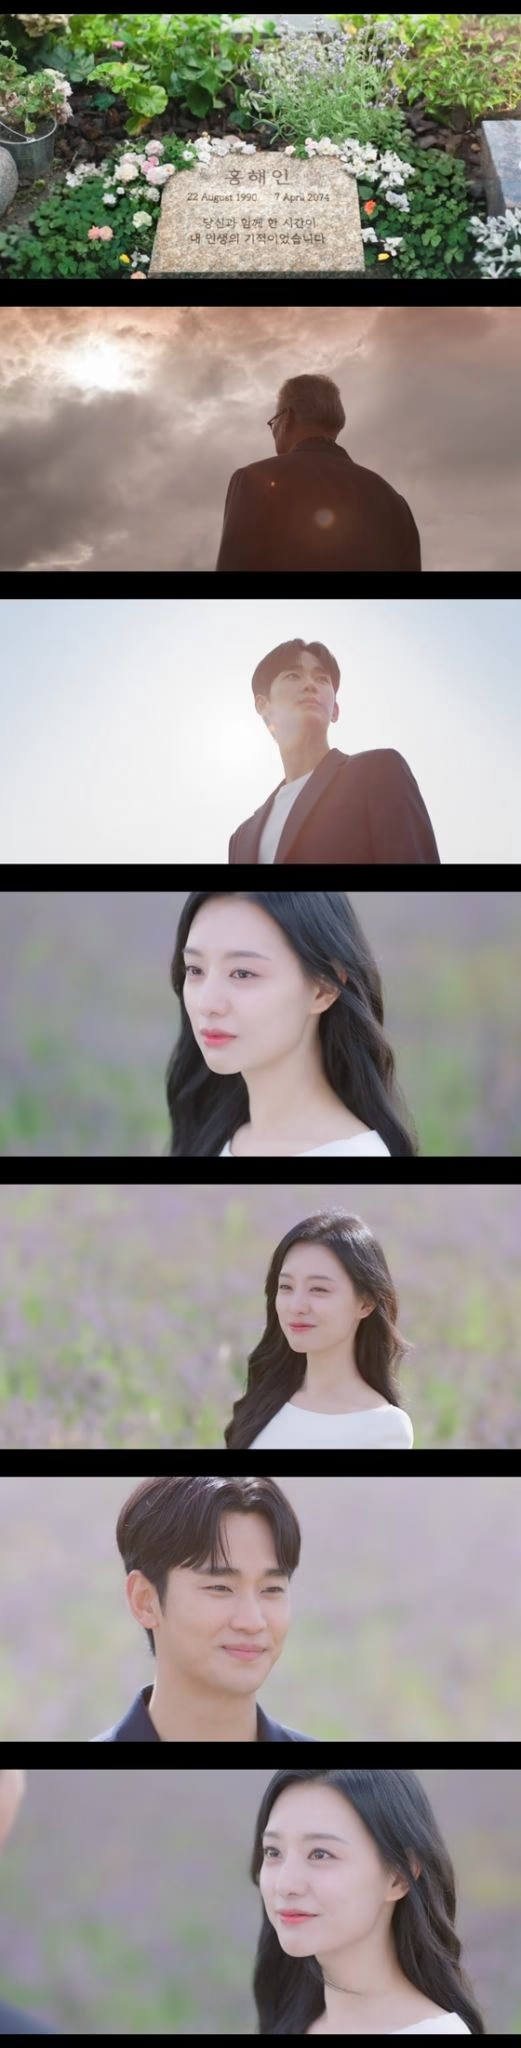 tvN 토일드라마 '눈물의 여왕' 최종회(16회)./사진=tvN 토일드라마 '눈물의 여왕' 영상 캡처